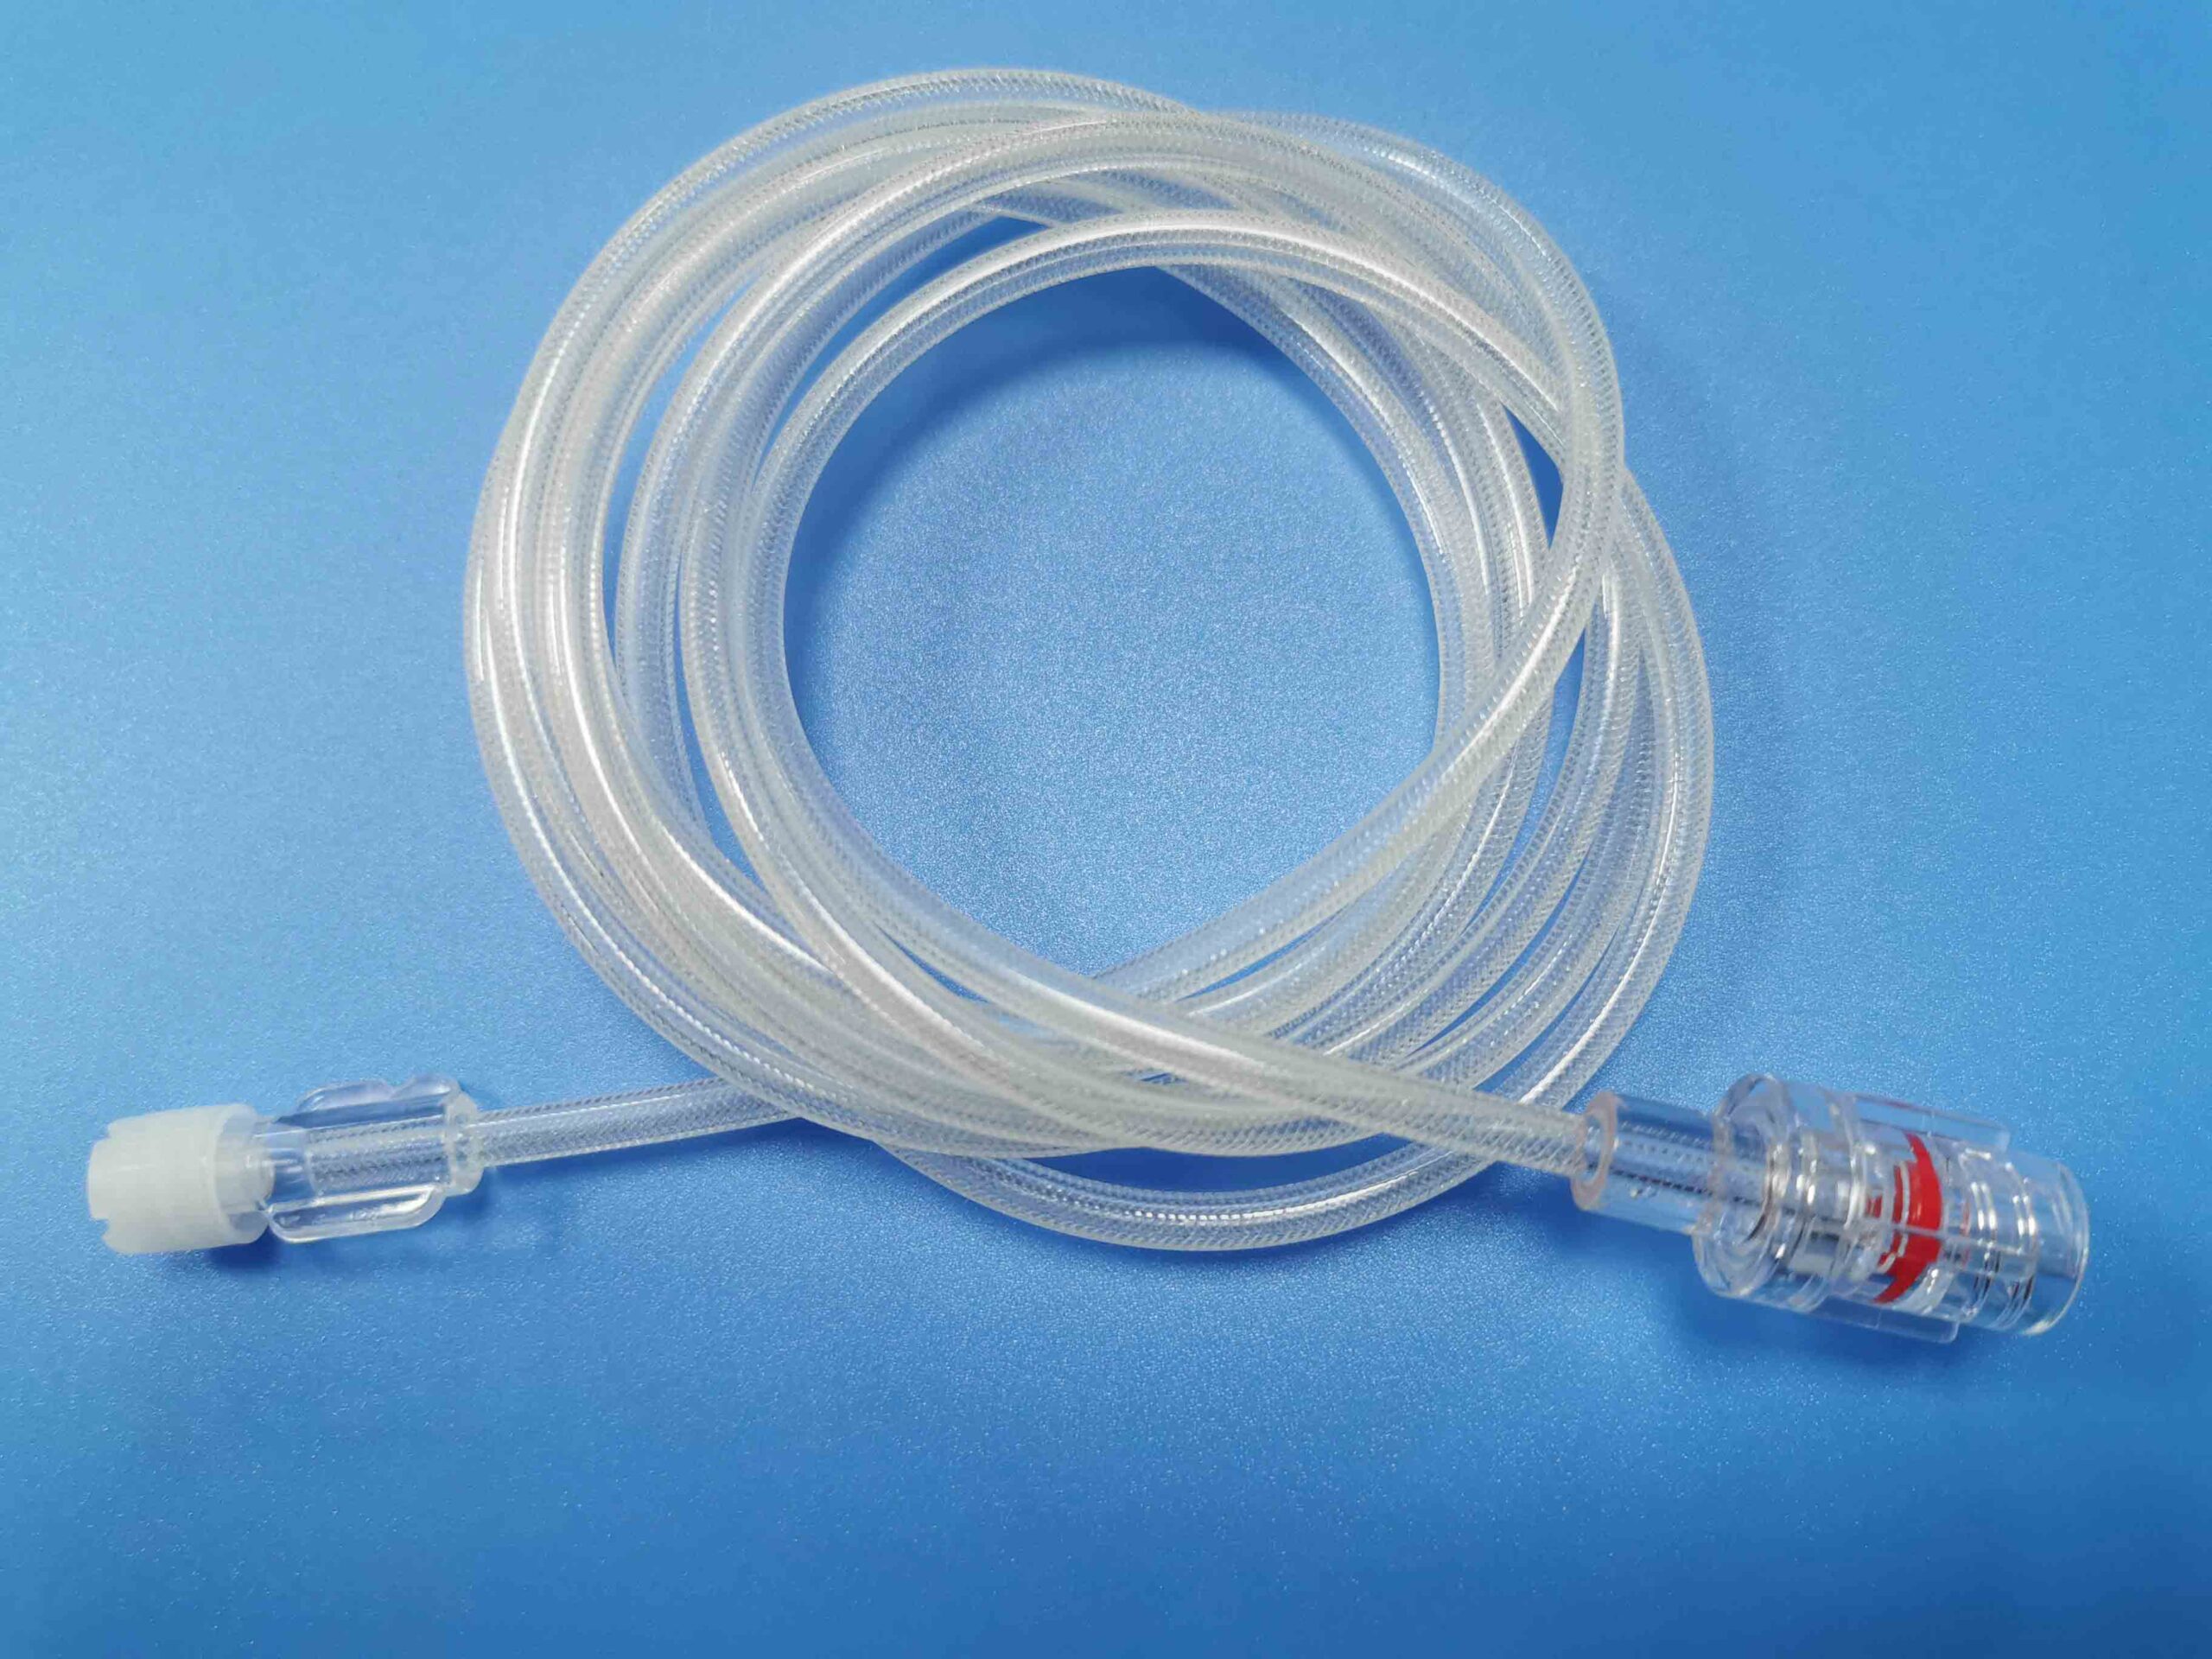 High pressure extension set – BQ+ medical device